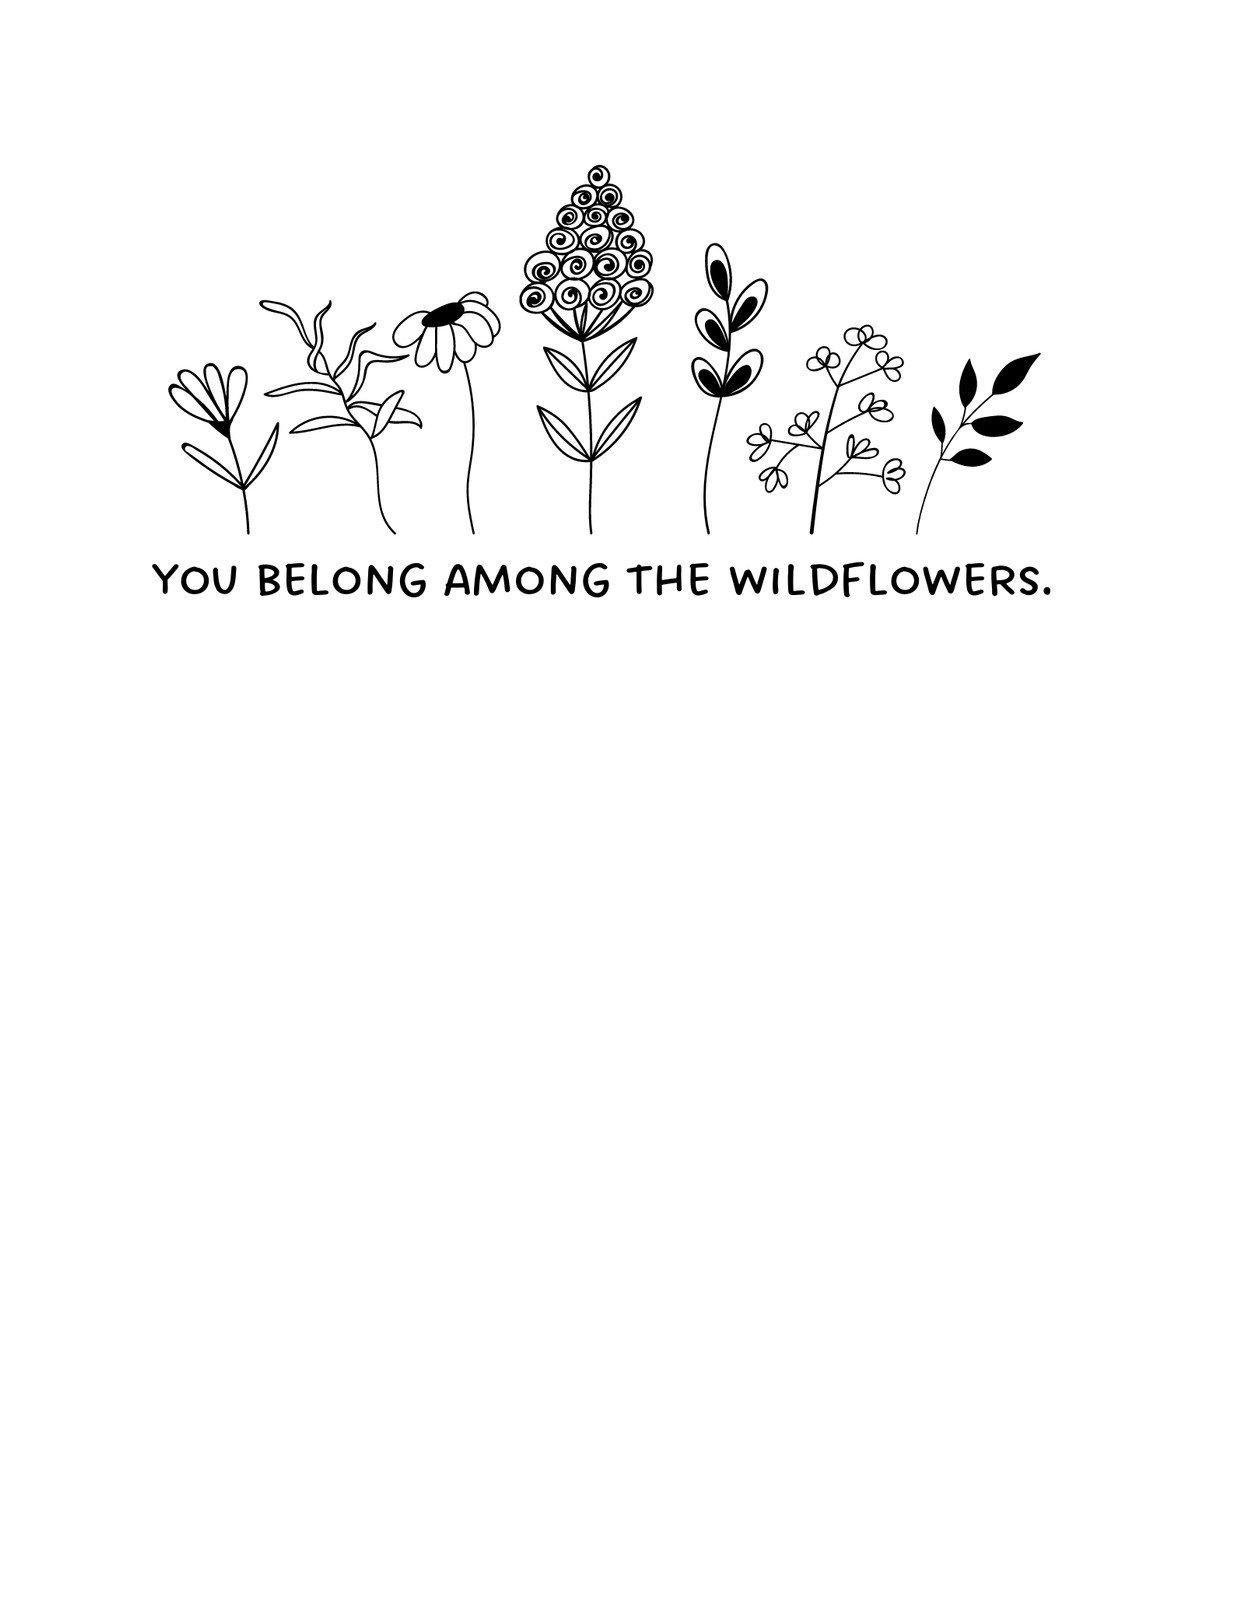 You belong among the wildflowers My Tom Petty tribute tattoo  rtattoo